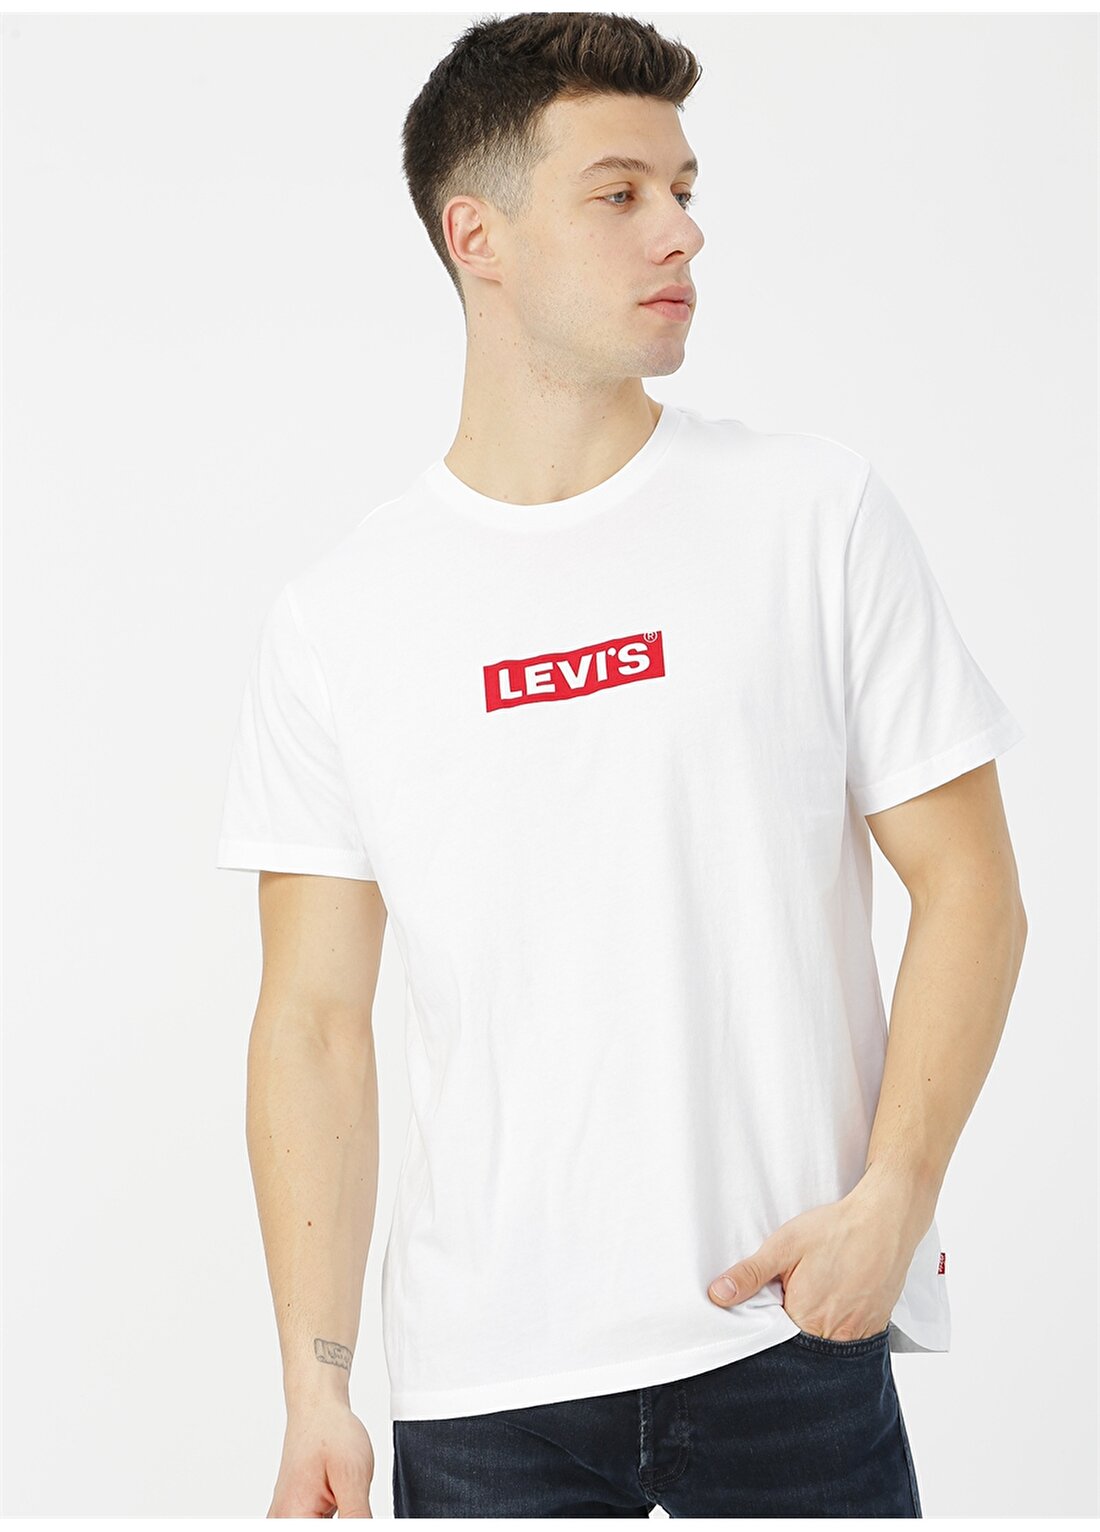 Levis 85785-0000 Boxtab Graphic Tee T-Shirt